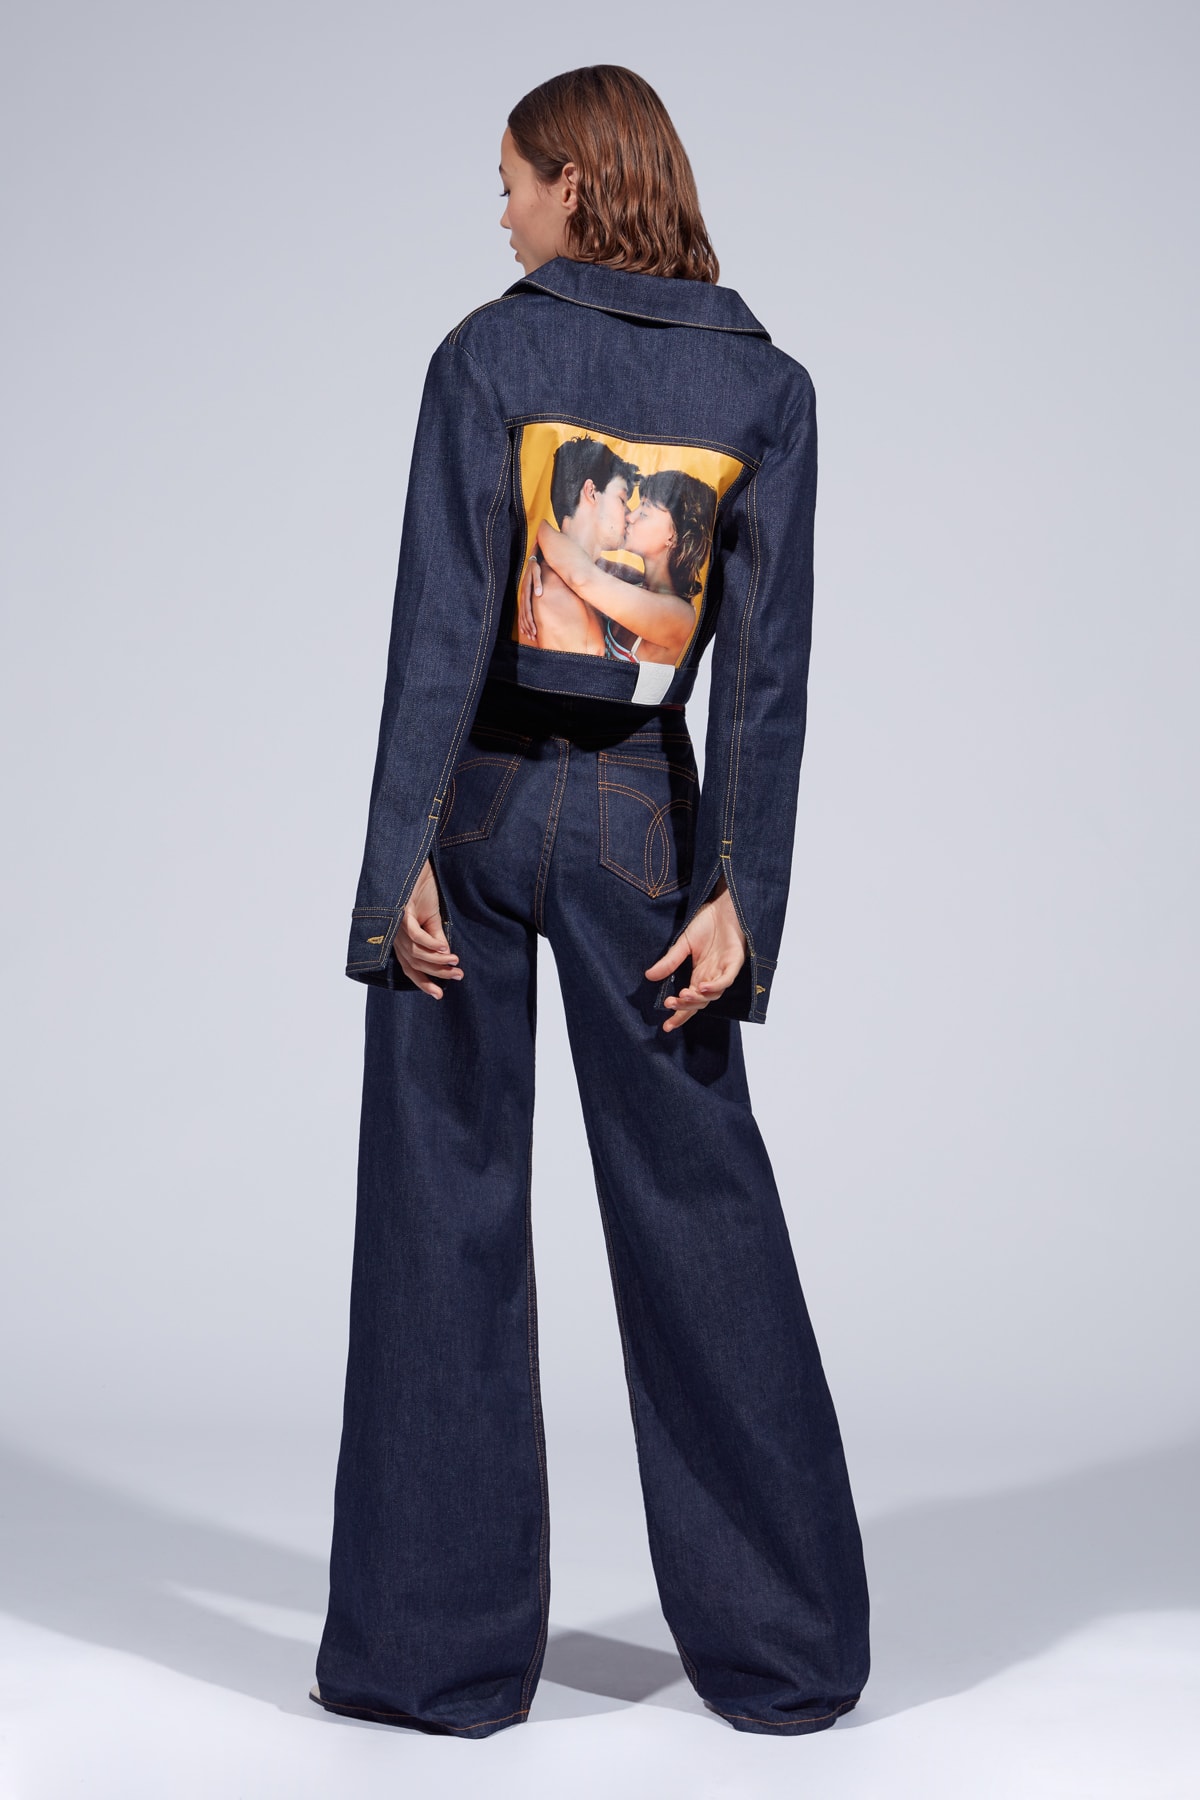 Fiorucci Spring Summer 2019 Collection Lookbook Flared Denim Pants Jacket Blue